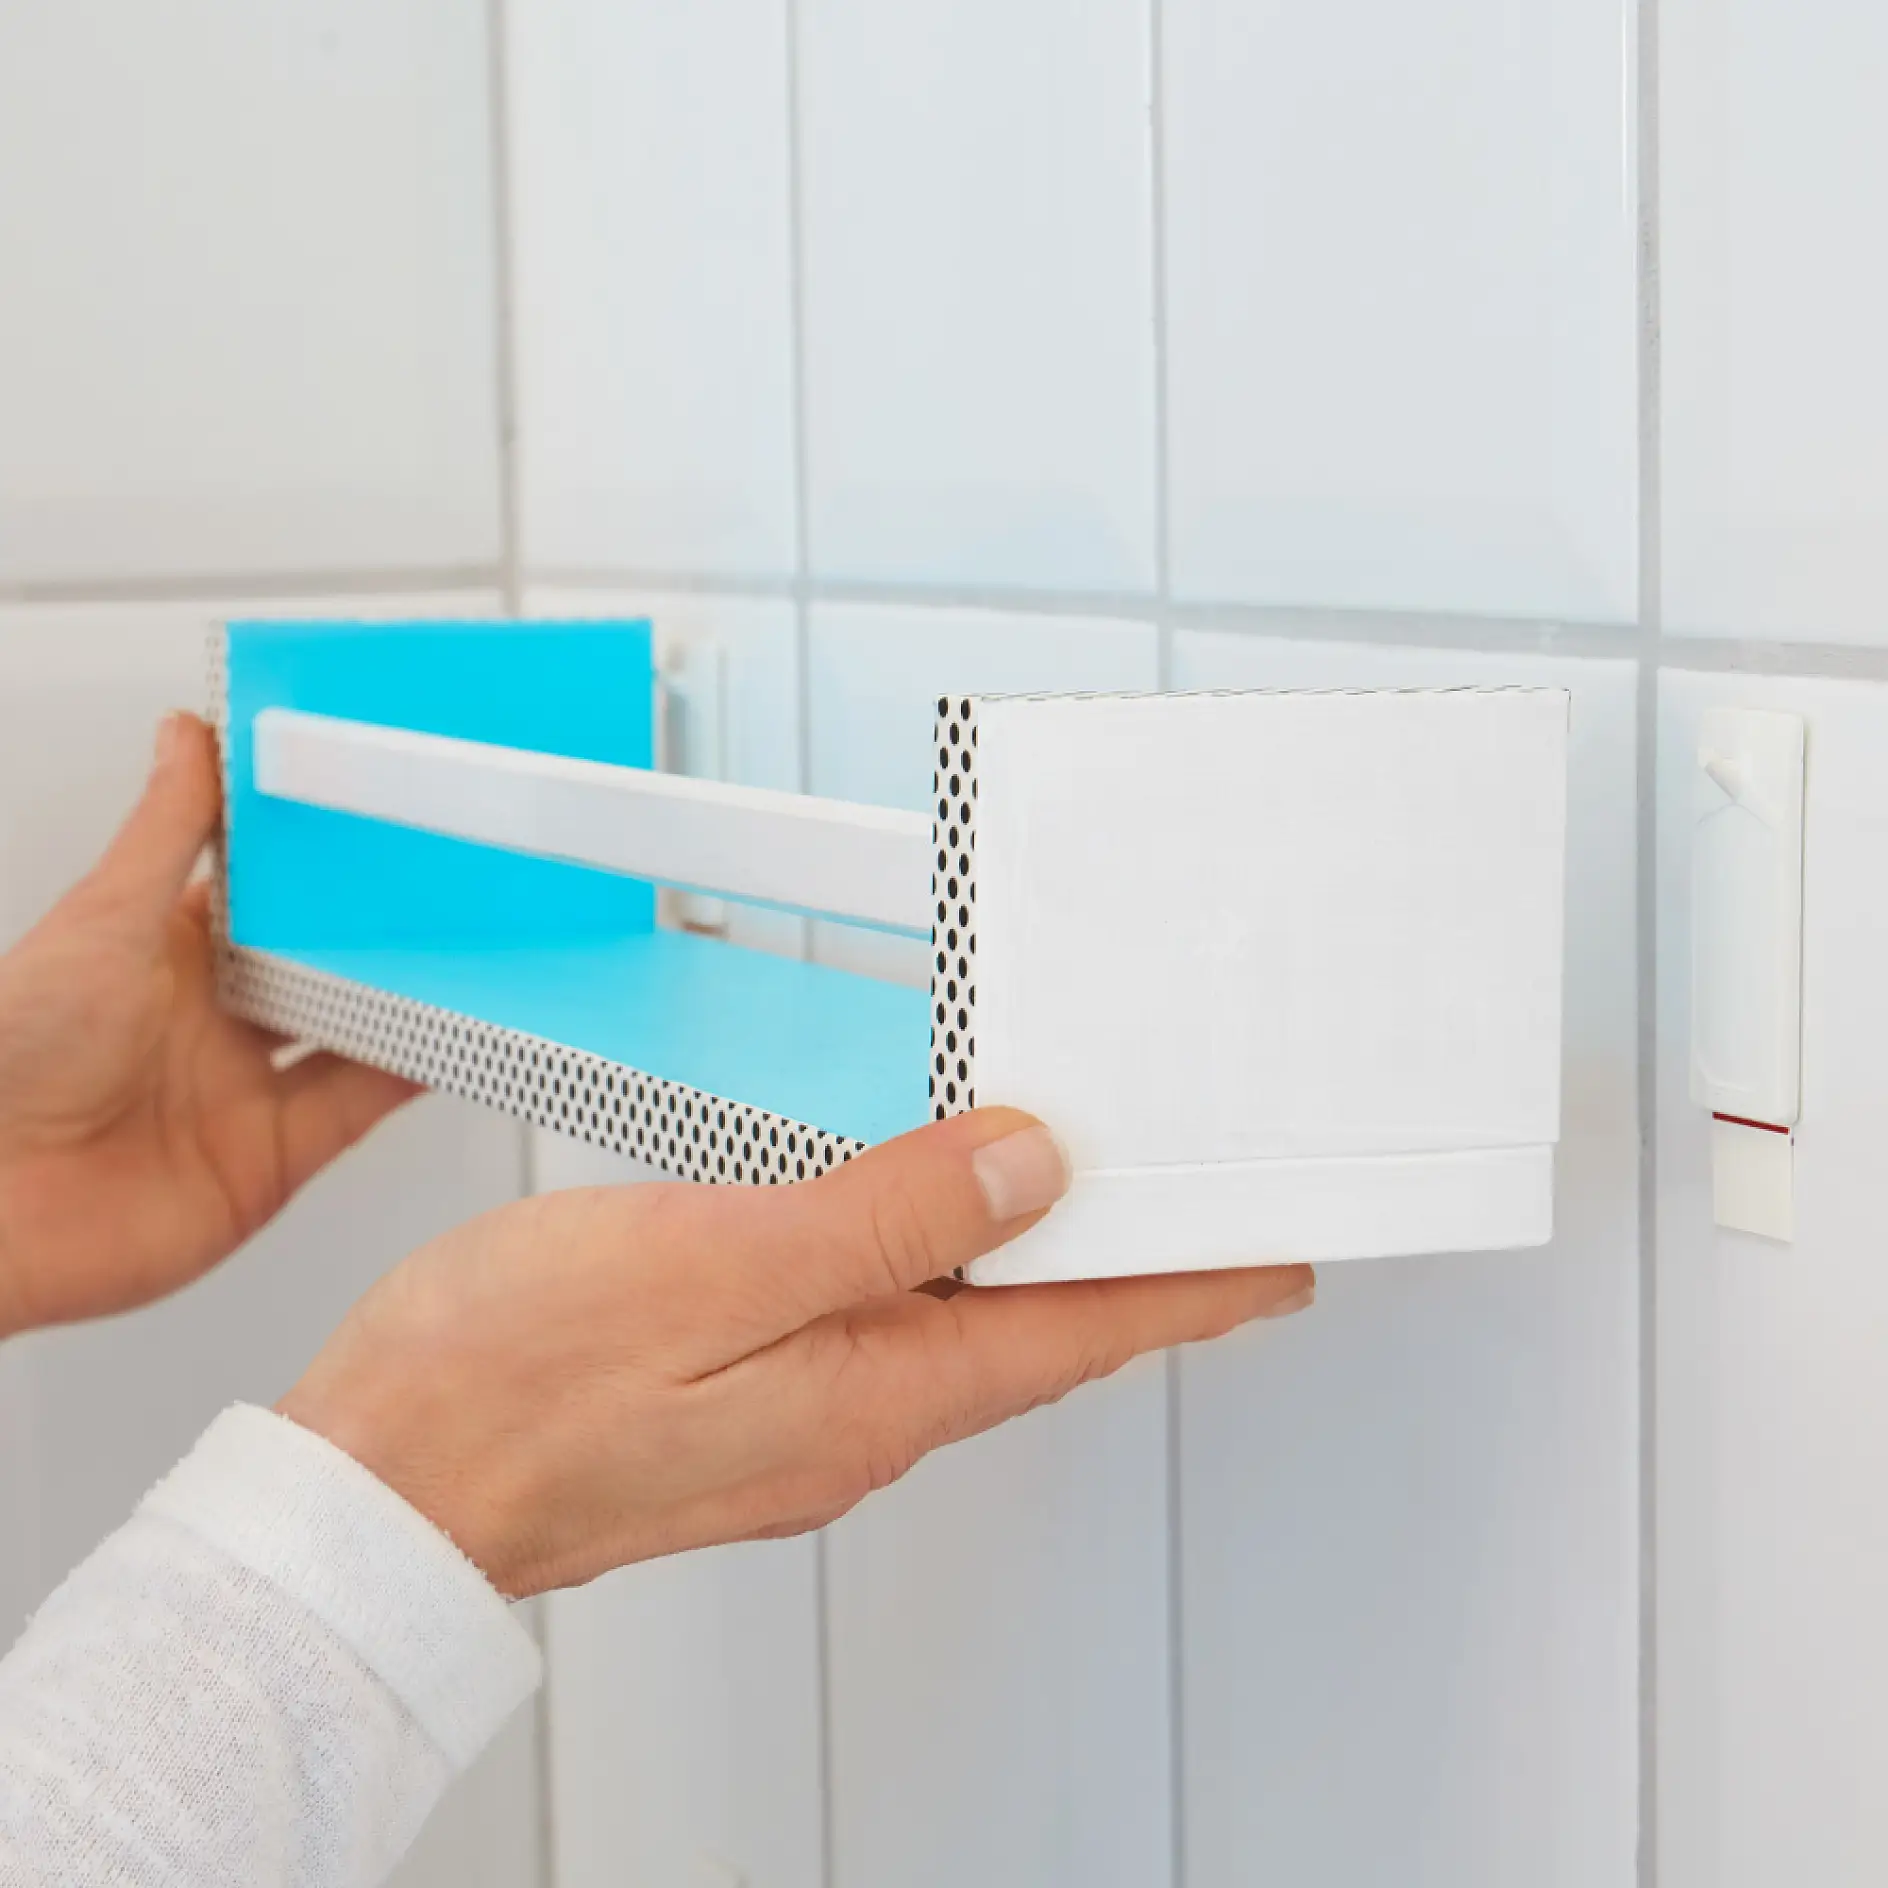 Using tesa® Adhesive Nail for Tiles & Metal 3 kg to wall-mount bathroom shelves – a great bathroom storage idea.